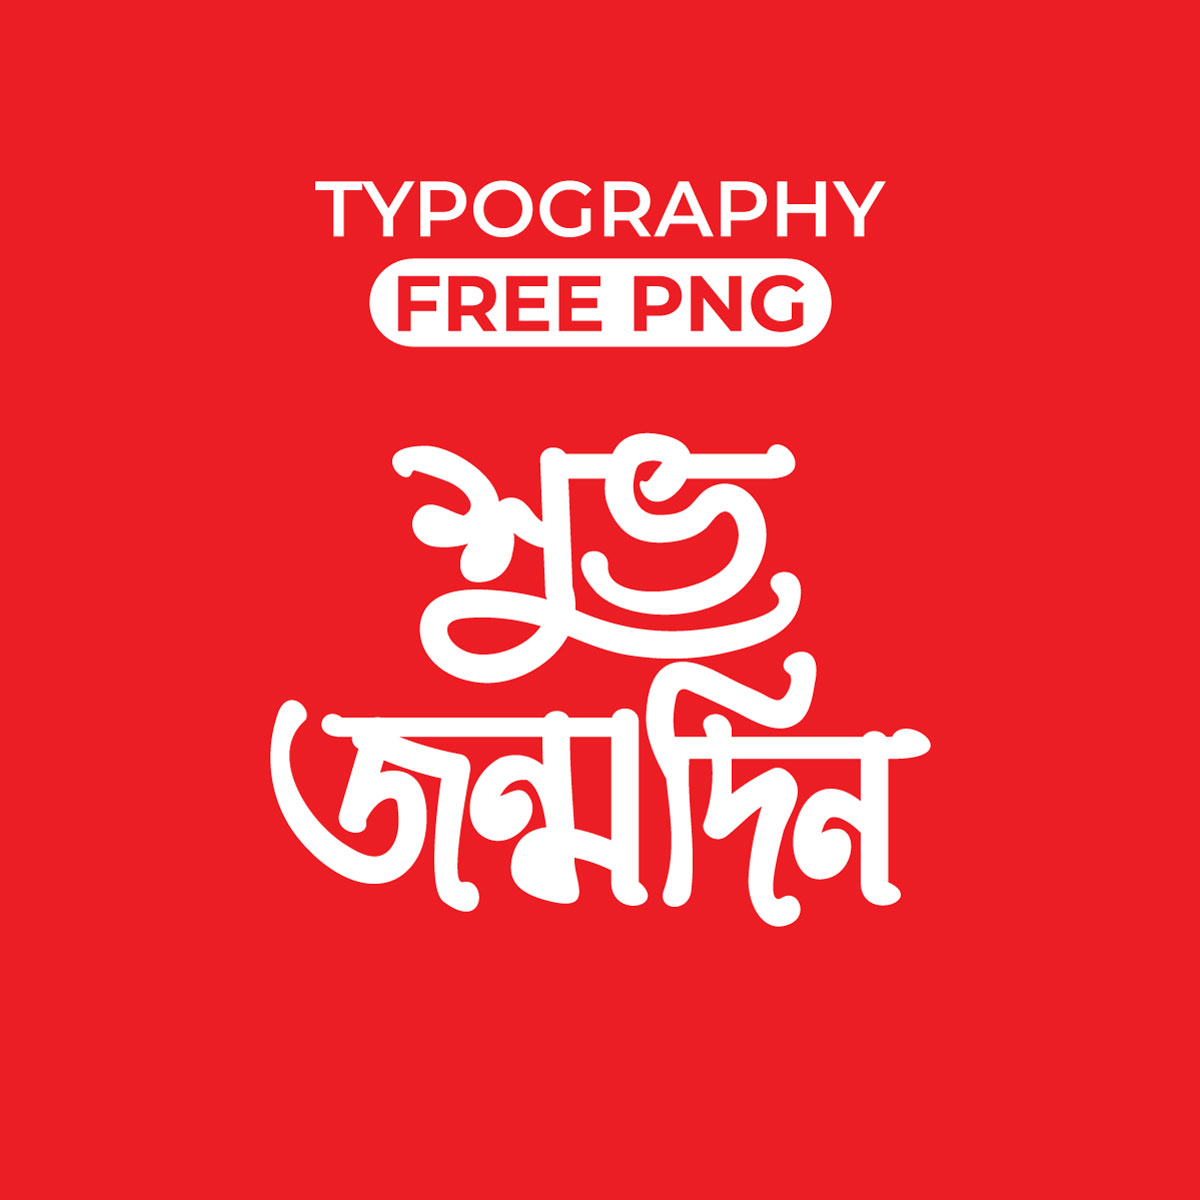 Happy Birthday Typography | শুভ জন্মদিন টাইপোগ্রাফি